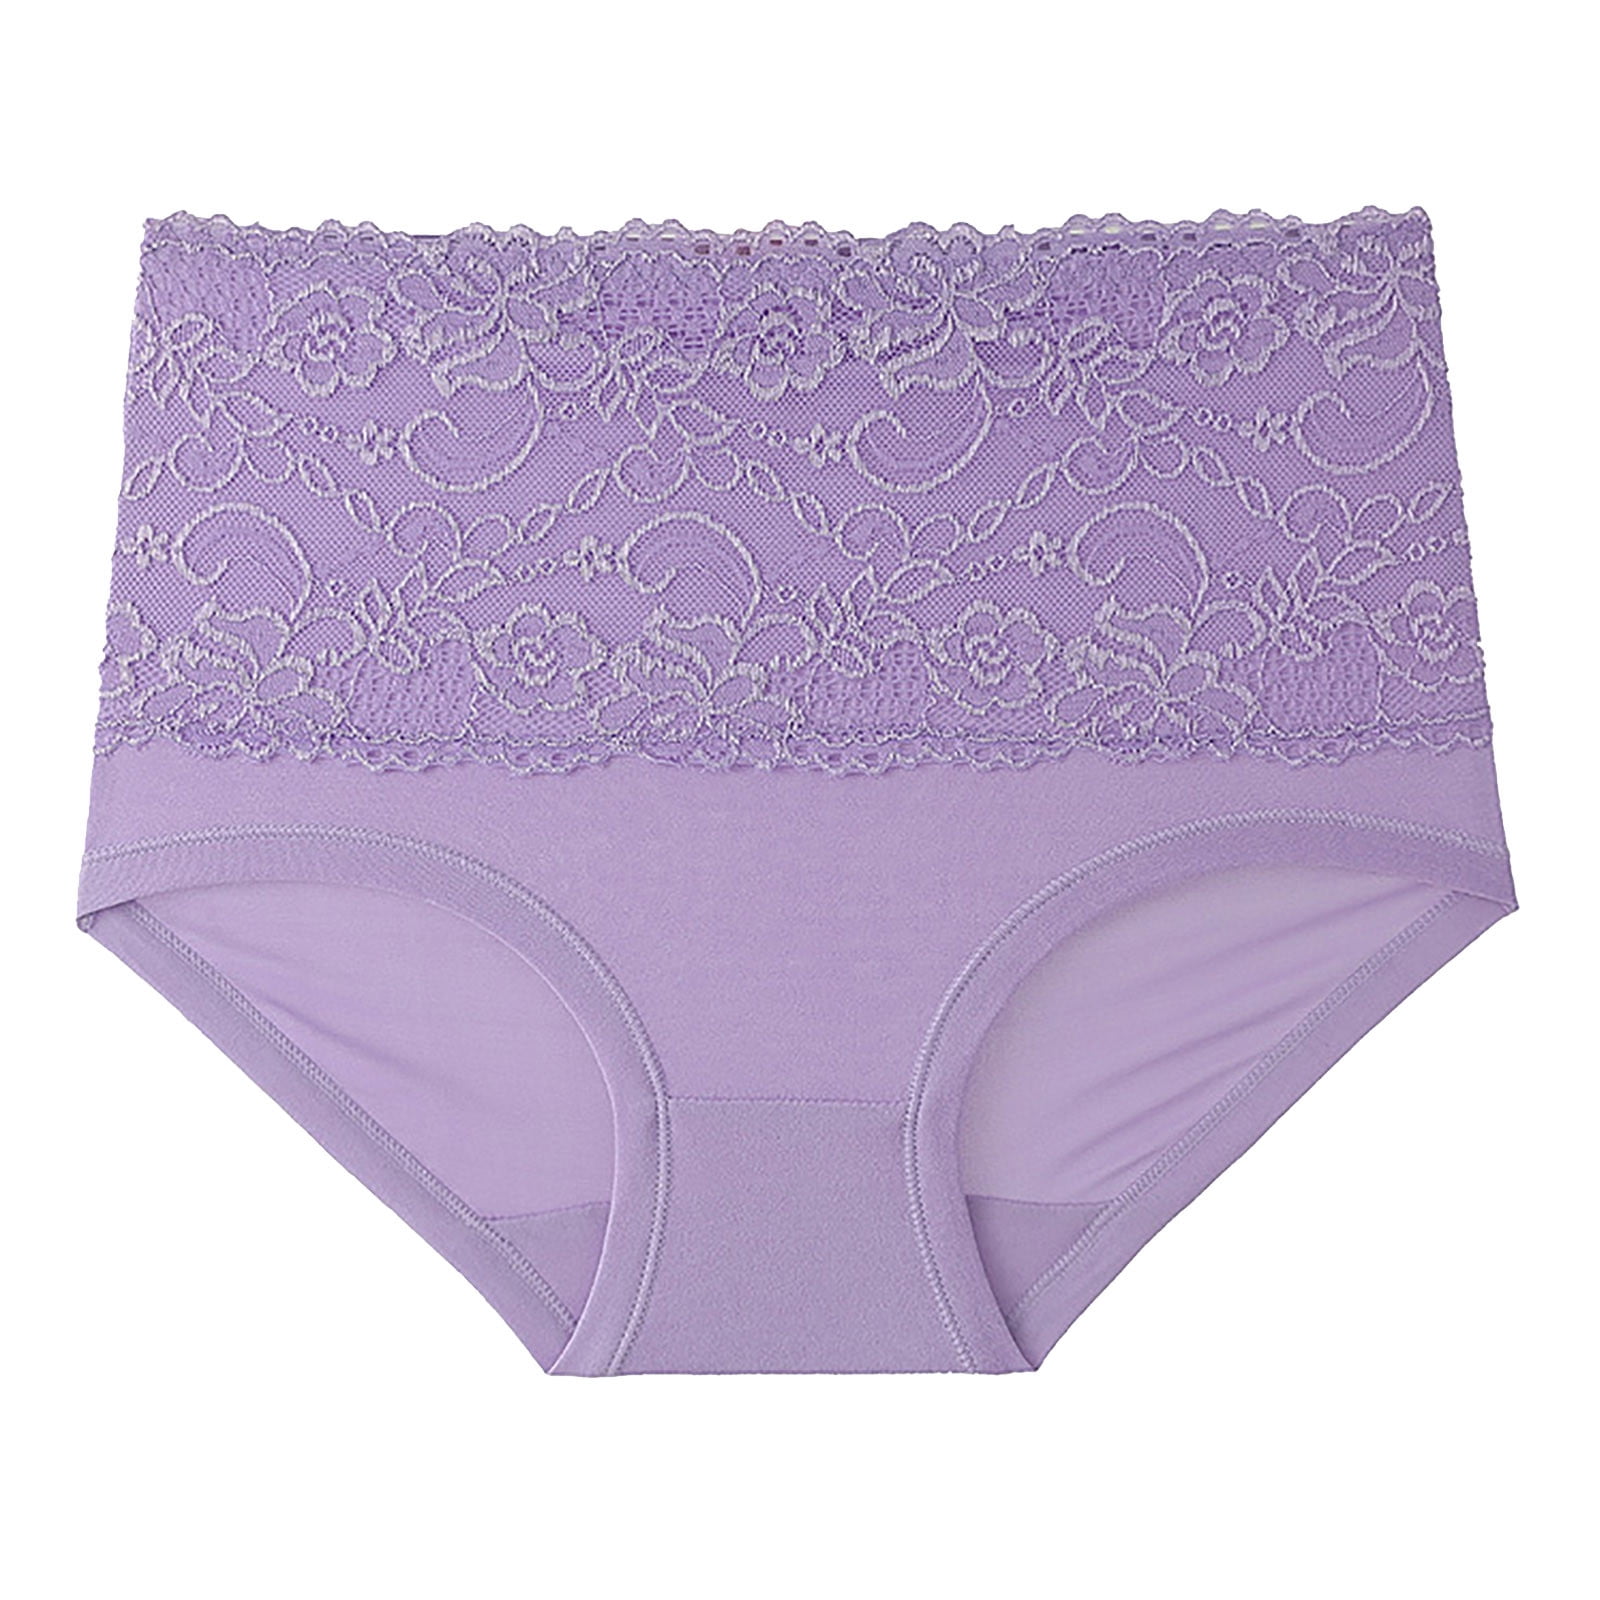 Wholesale Plus Size Women High Waist Dark Purple Lace Bra Panty